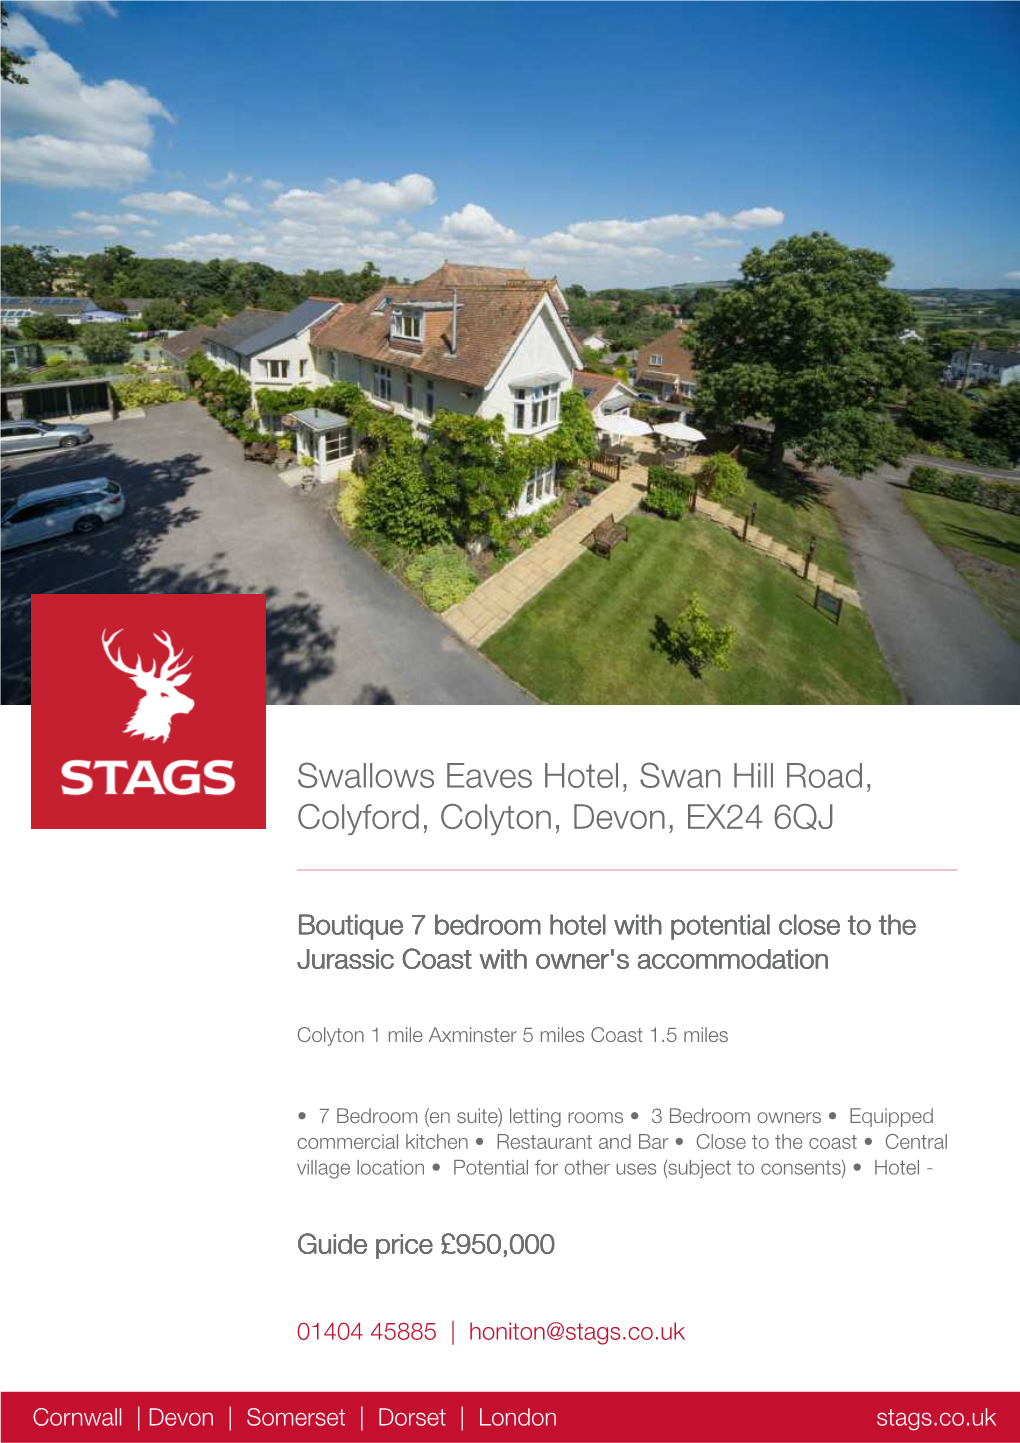 Swallows Eaves Hotel, Swan Hill Road, Colyford, Colyton, Devon, EX24 6QJ